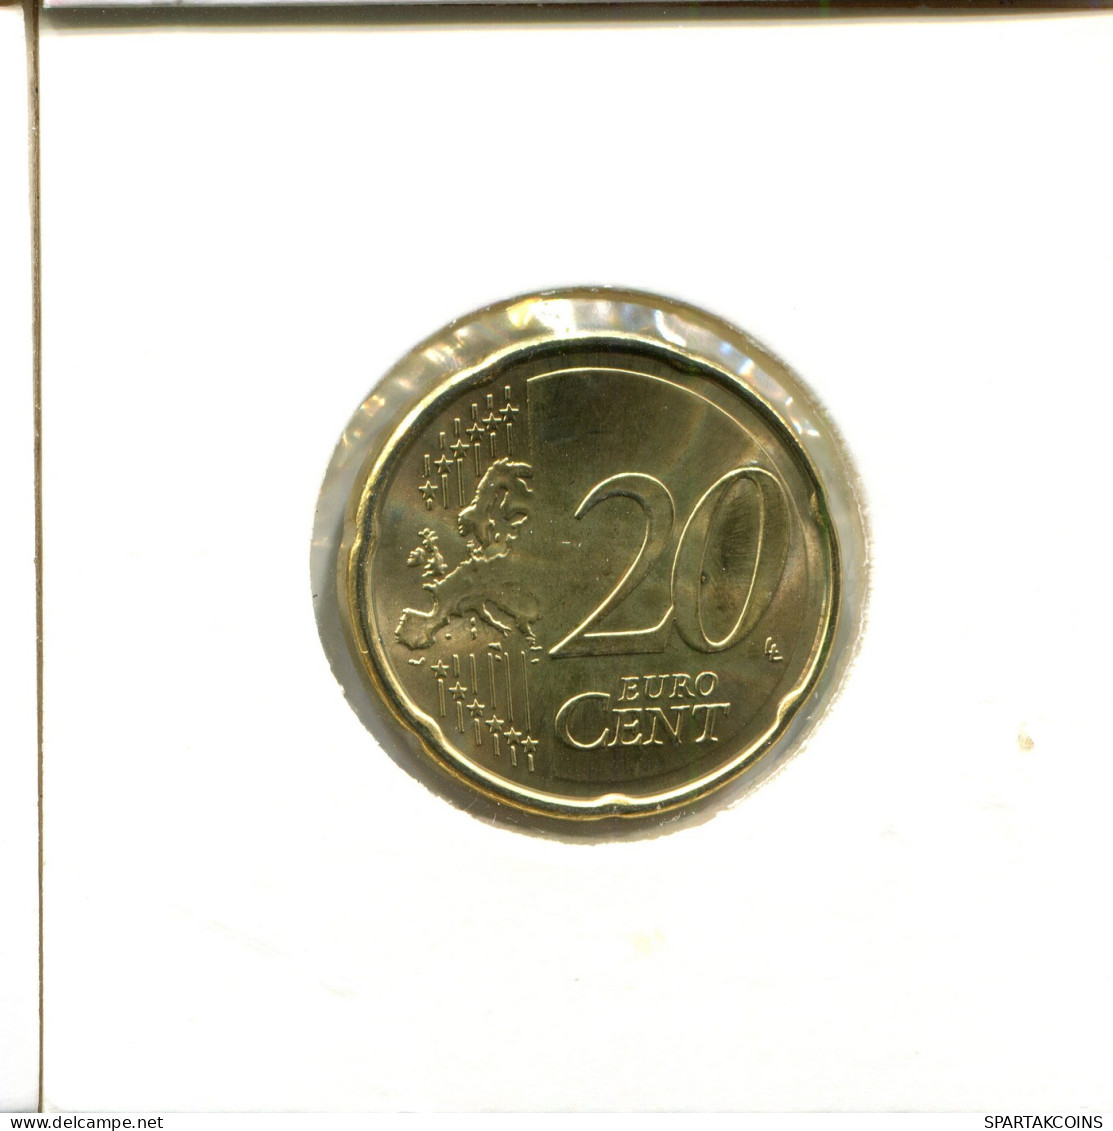 20 EURO CENTS 2011 ESTONIA Coin #EU069.U - Estonia